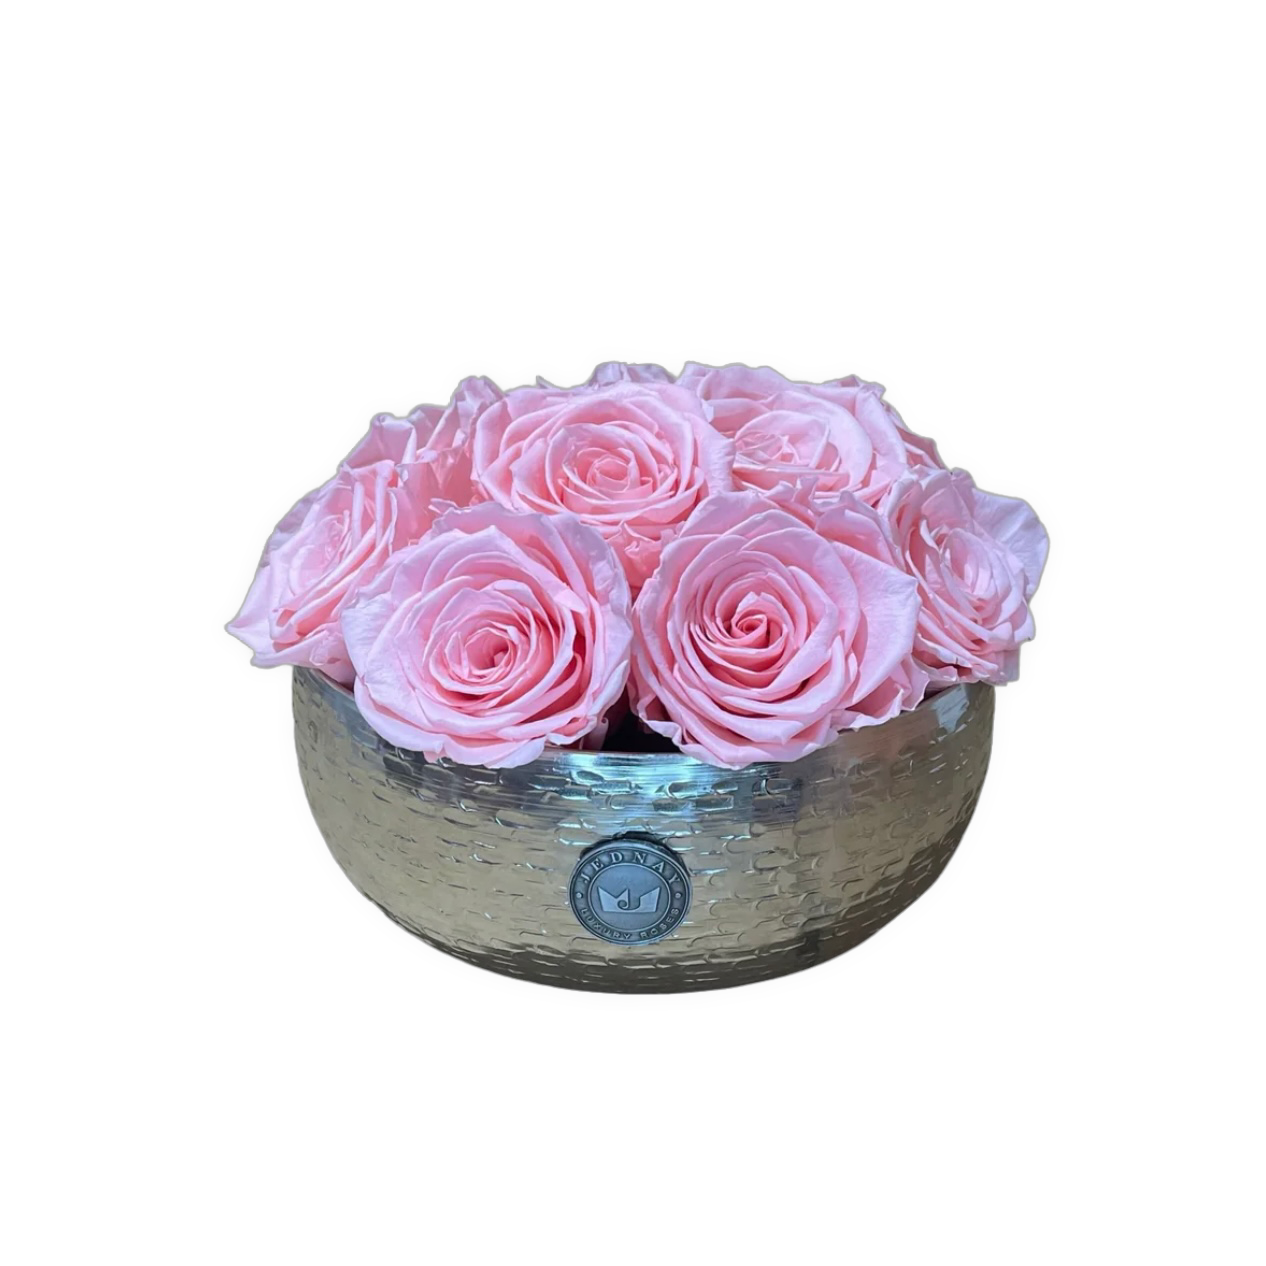 The Knightsbridge - Soft Pink Forever Roses - Chrome Bowl